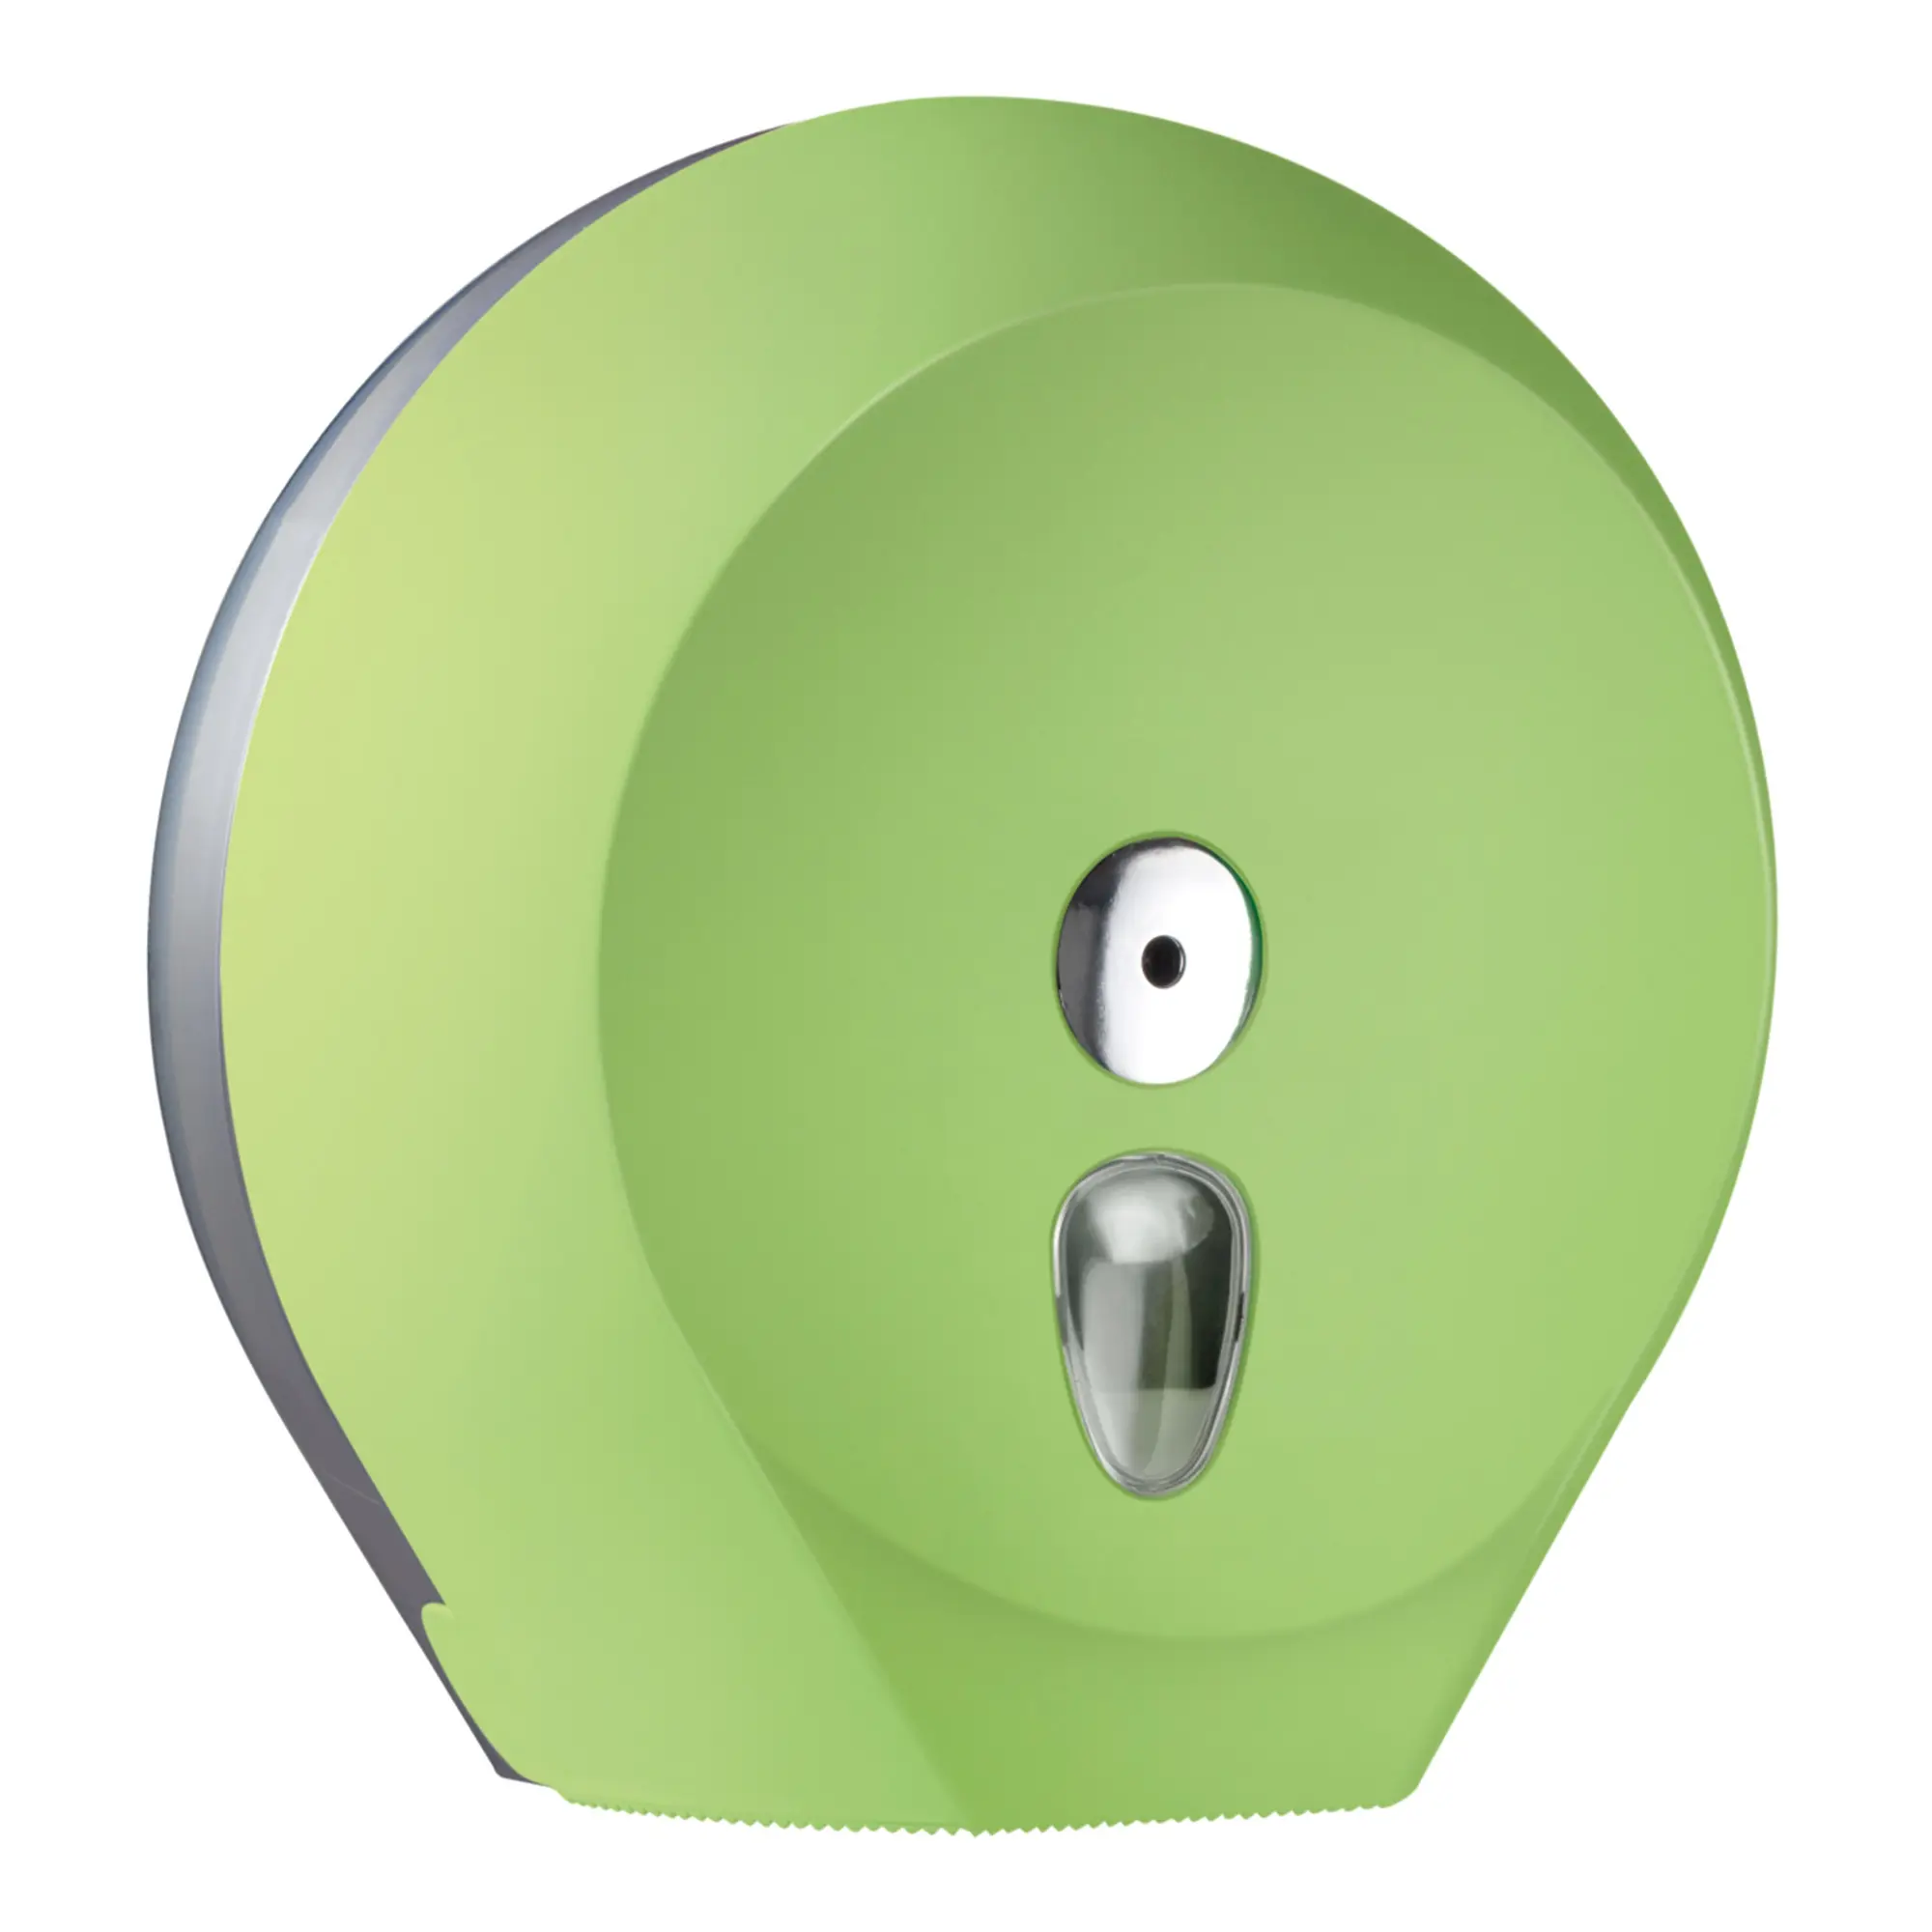 Racon CE designo L Toilettenpapierspender Jumbo Maxi grün 118072_1